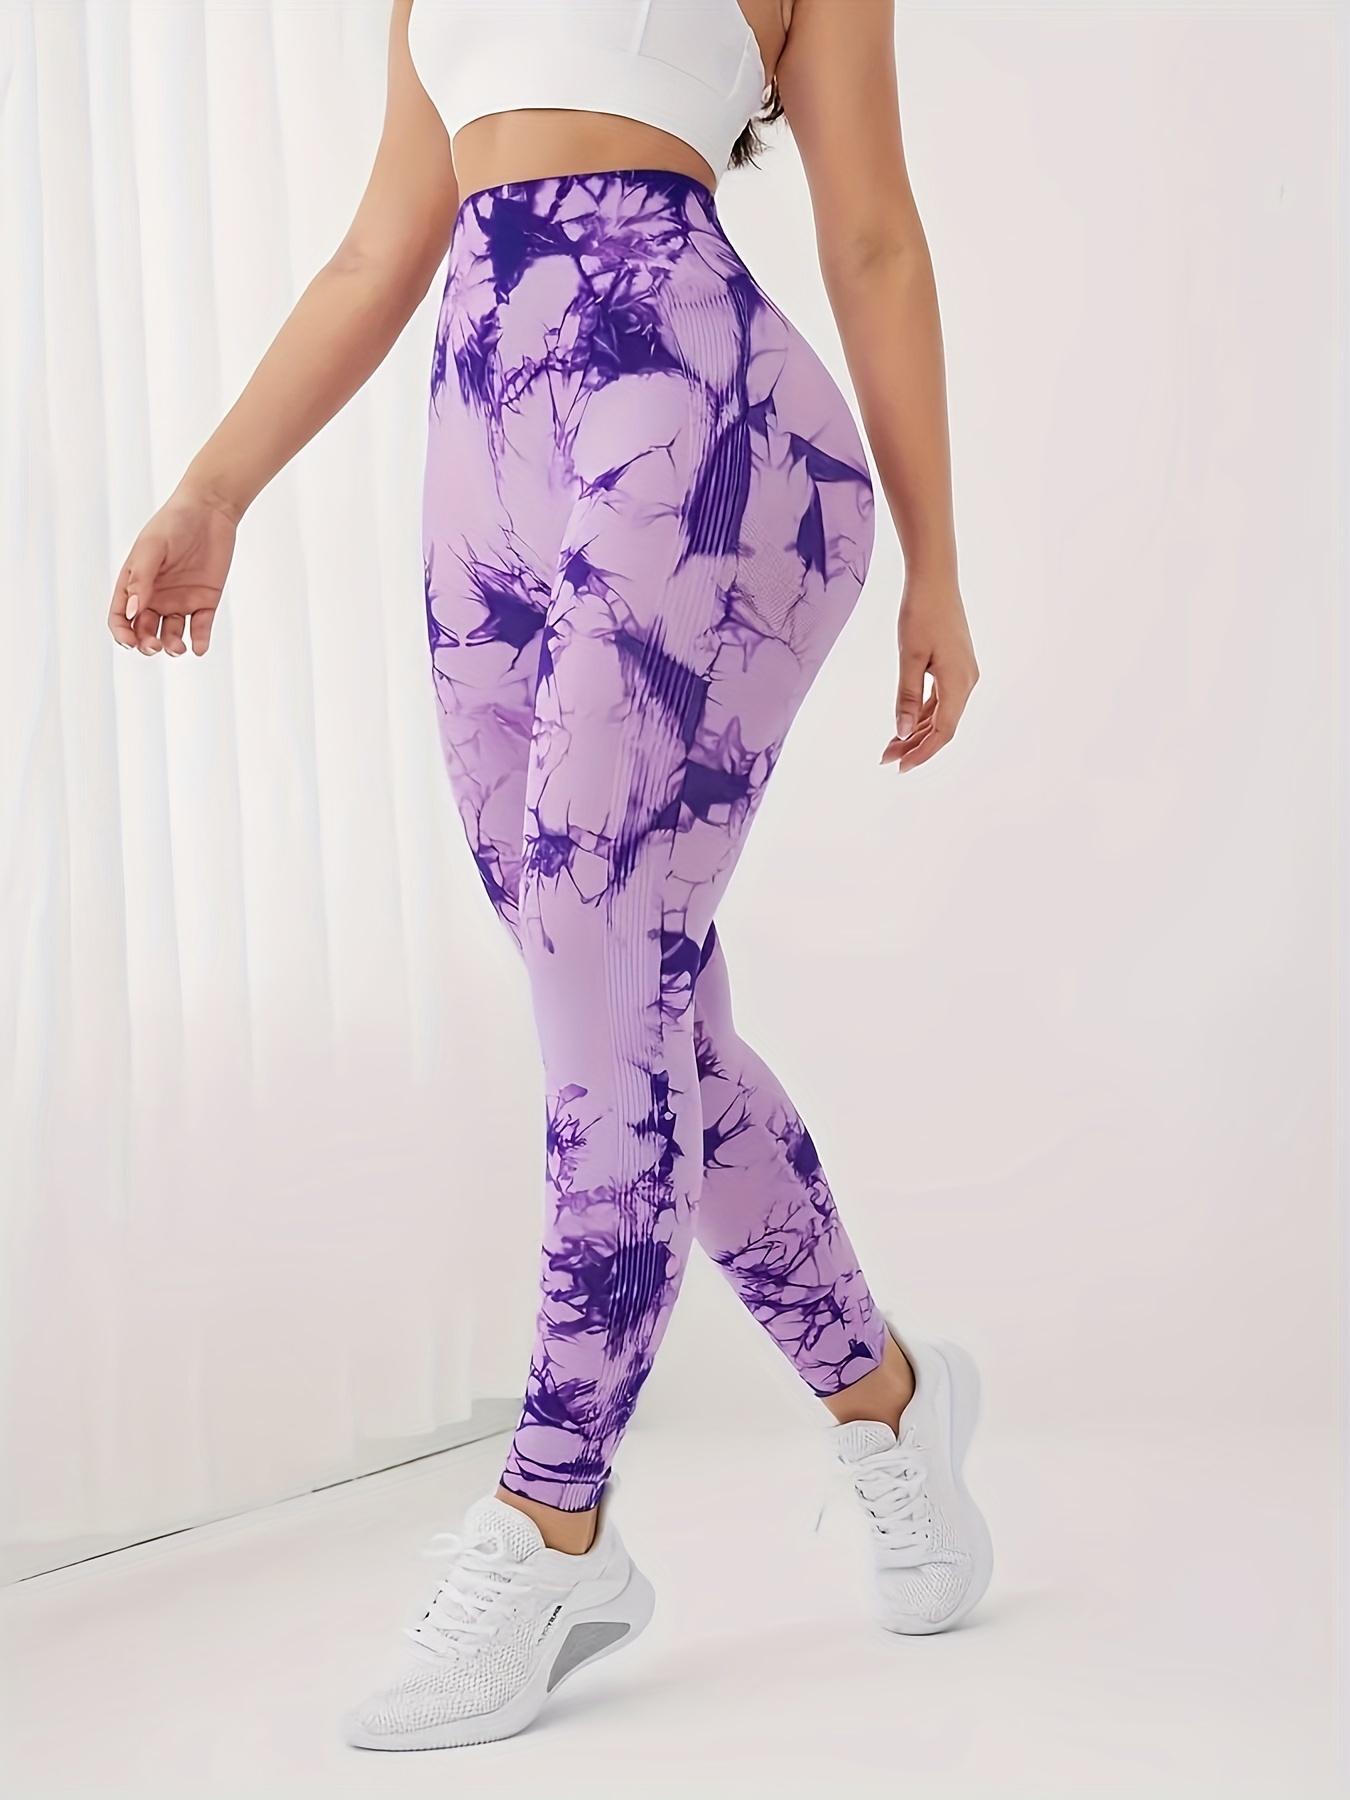 Ropa deportiva mujer fitness yoga tie dye leggings high waist